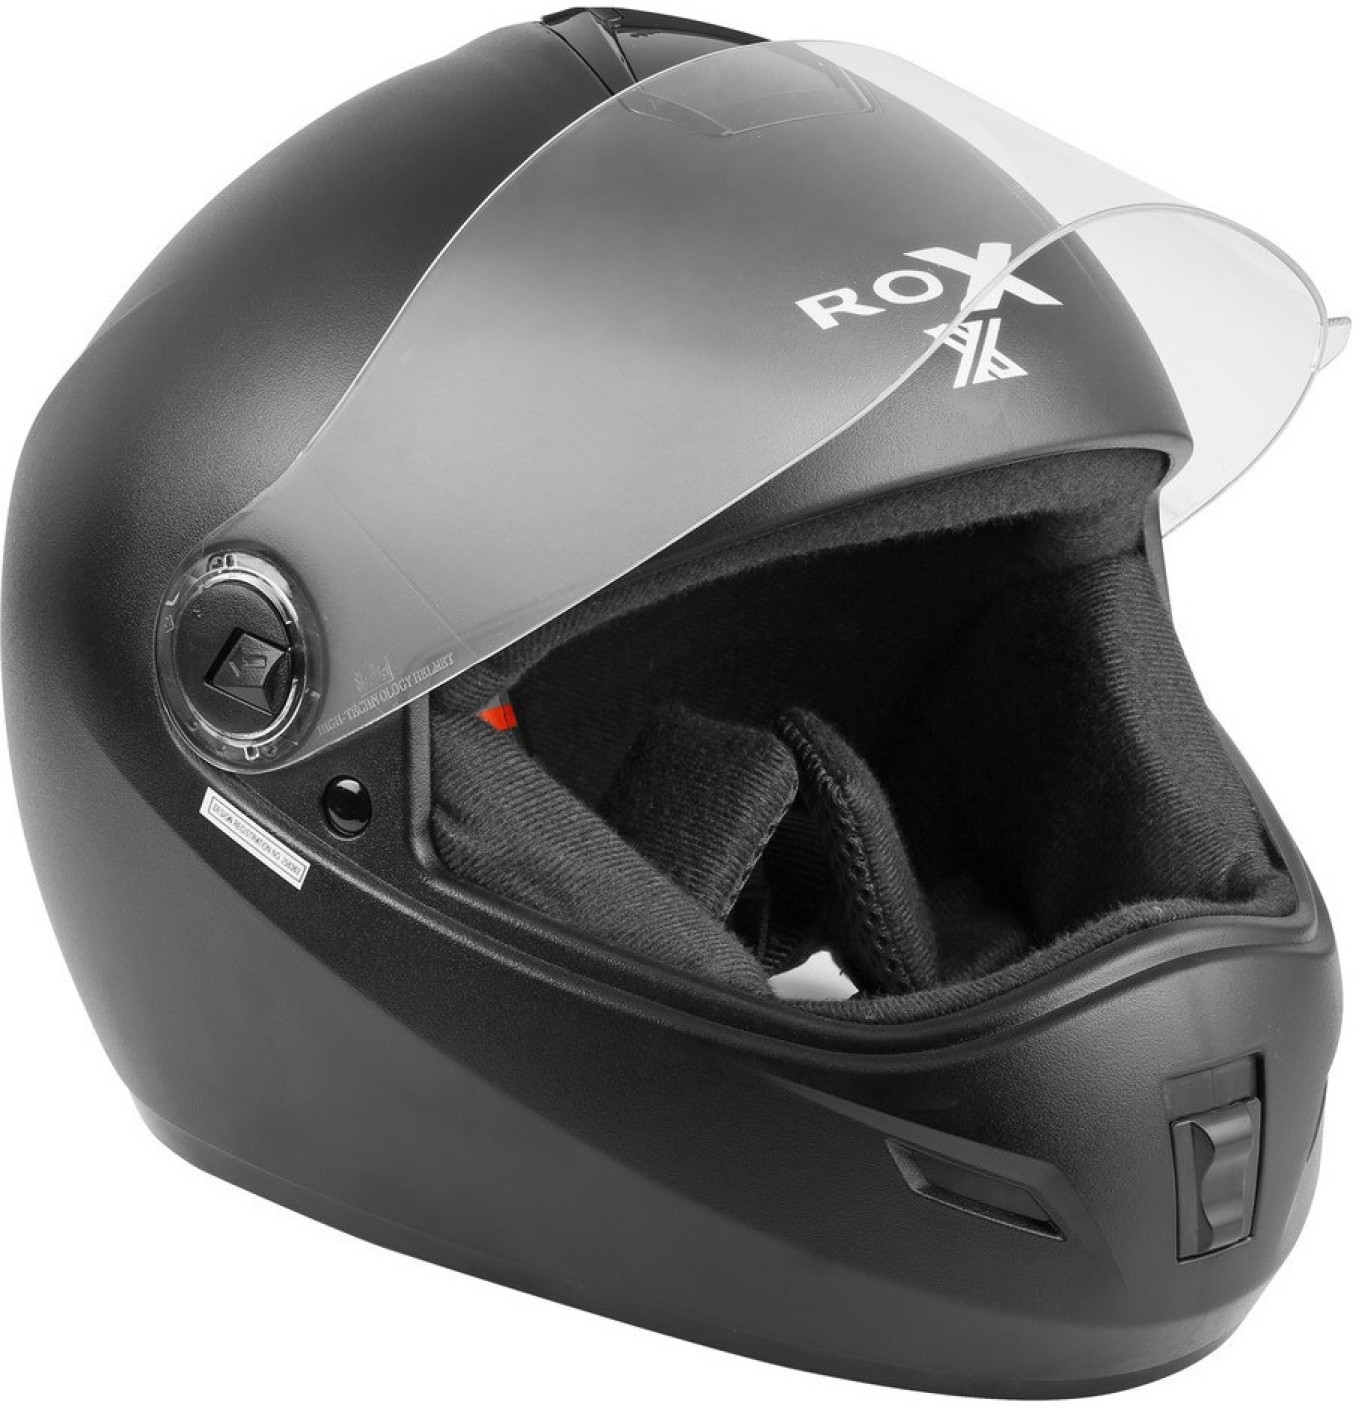 Steelbird Rox x/sbh-2 Motorbike Helmet - Buy Steelbird Rox x/sbh-2